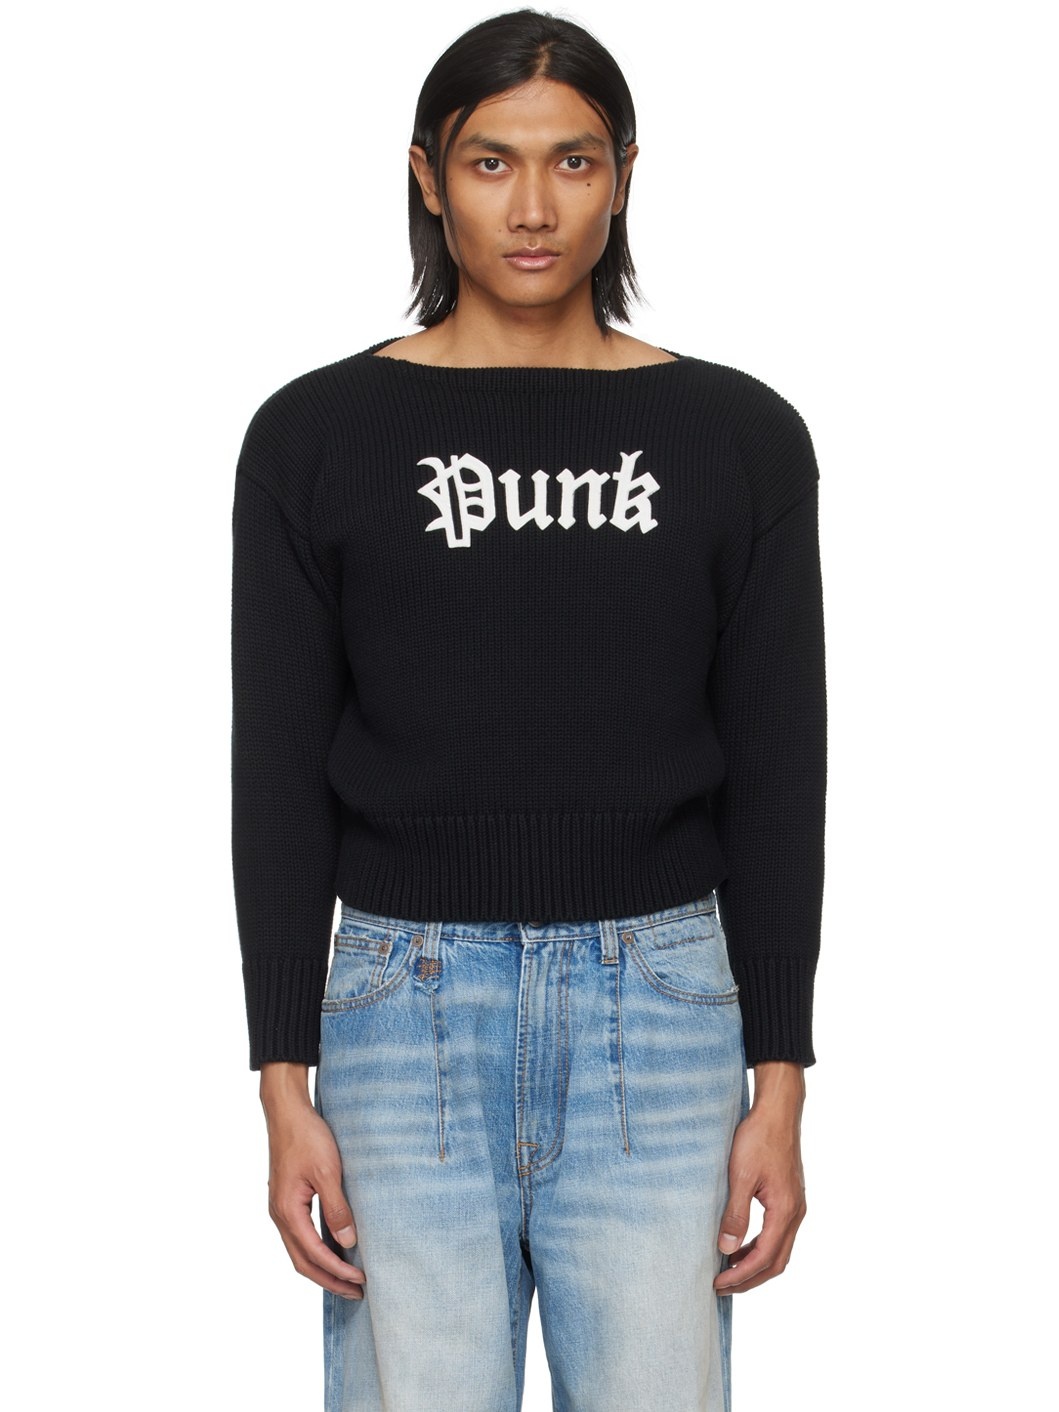 Black Gothic 'Punk' Sweater - 1